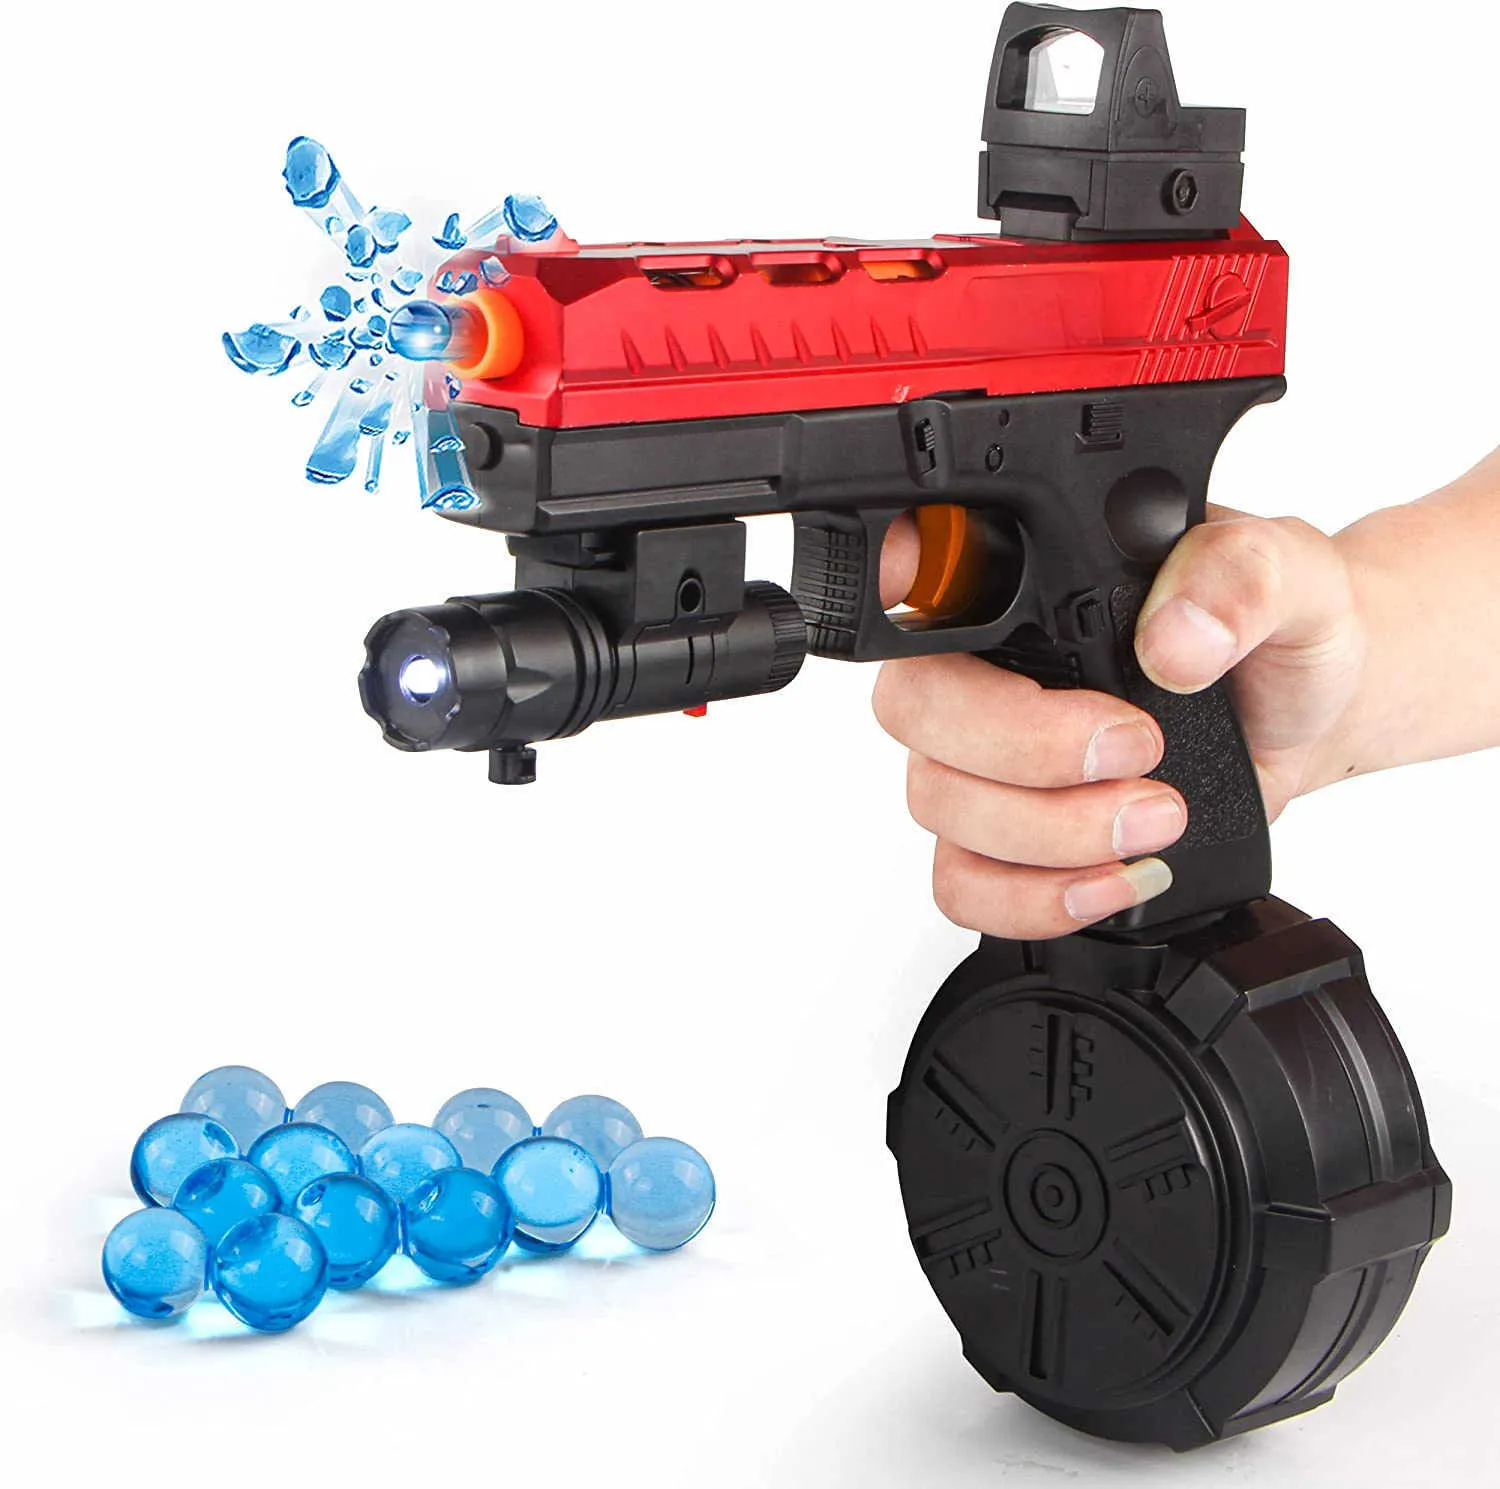 Sand Play Water Fun 2 em 1 Glock Gel Blaster Electric Beads Toy Gun Splatter Ball Airsoft Pistola Outdoor Game Pistol Para Adultos Crianças Z0523